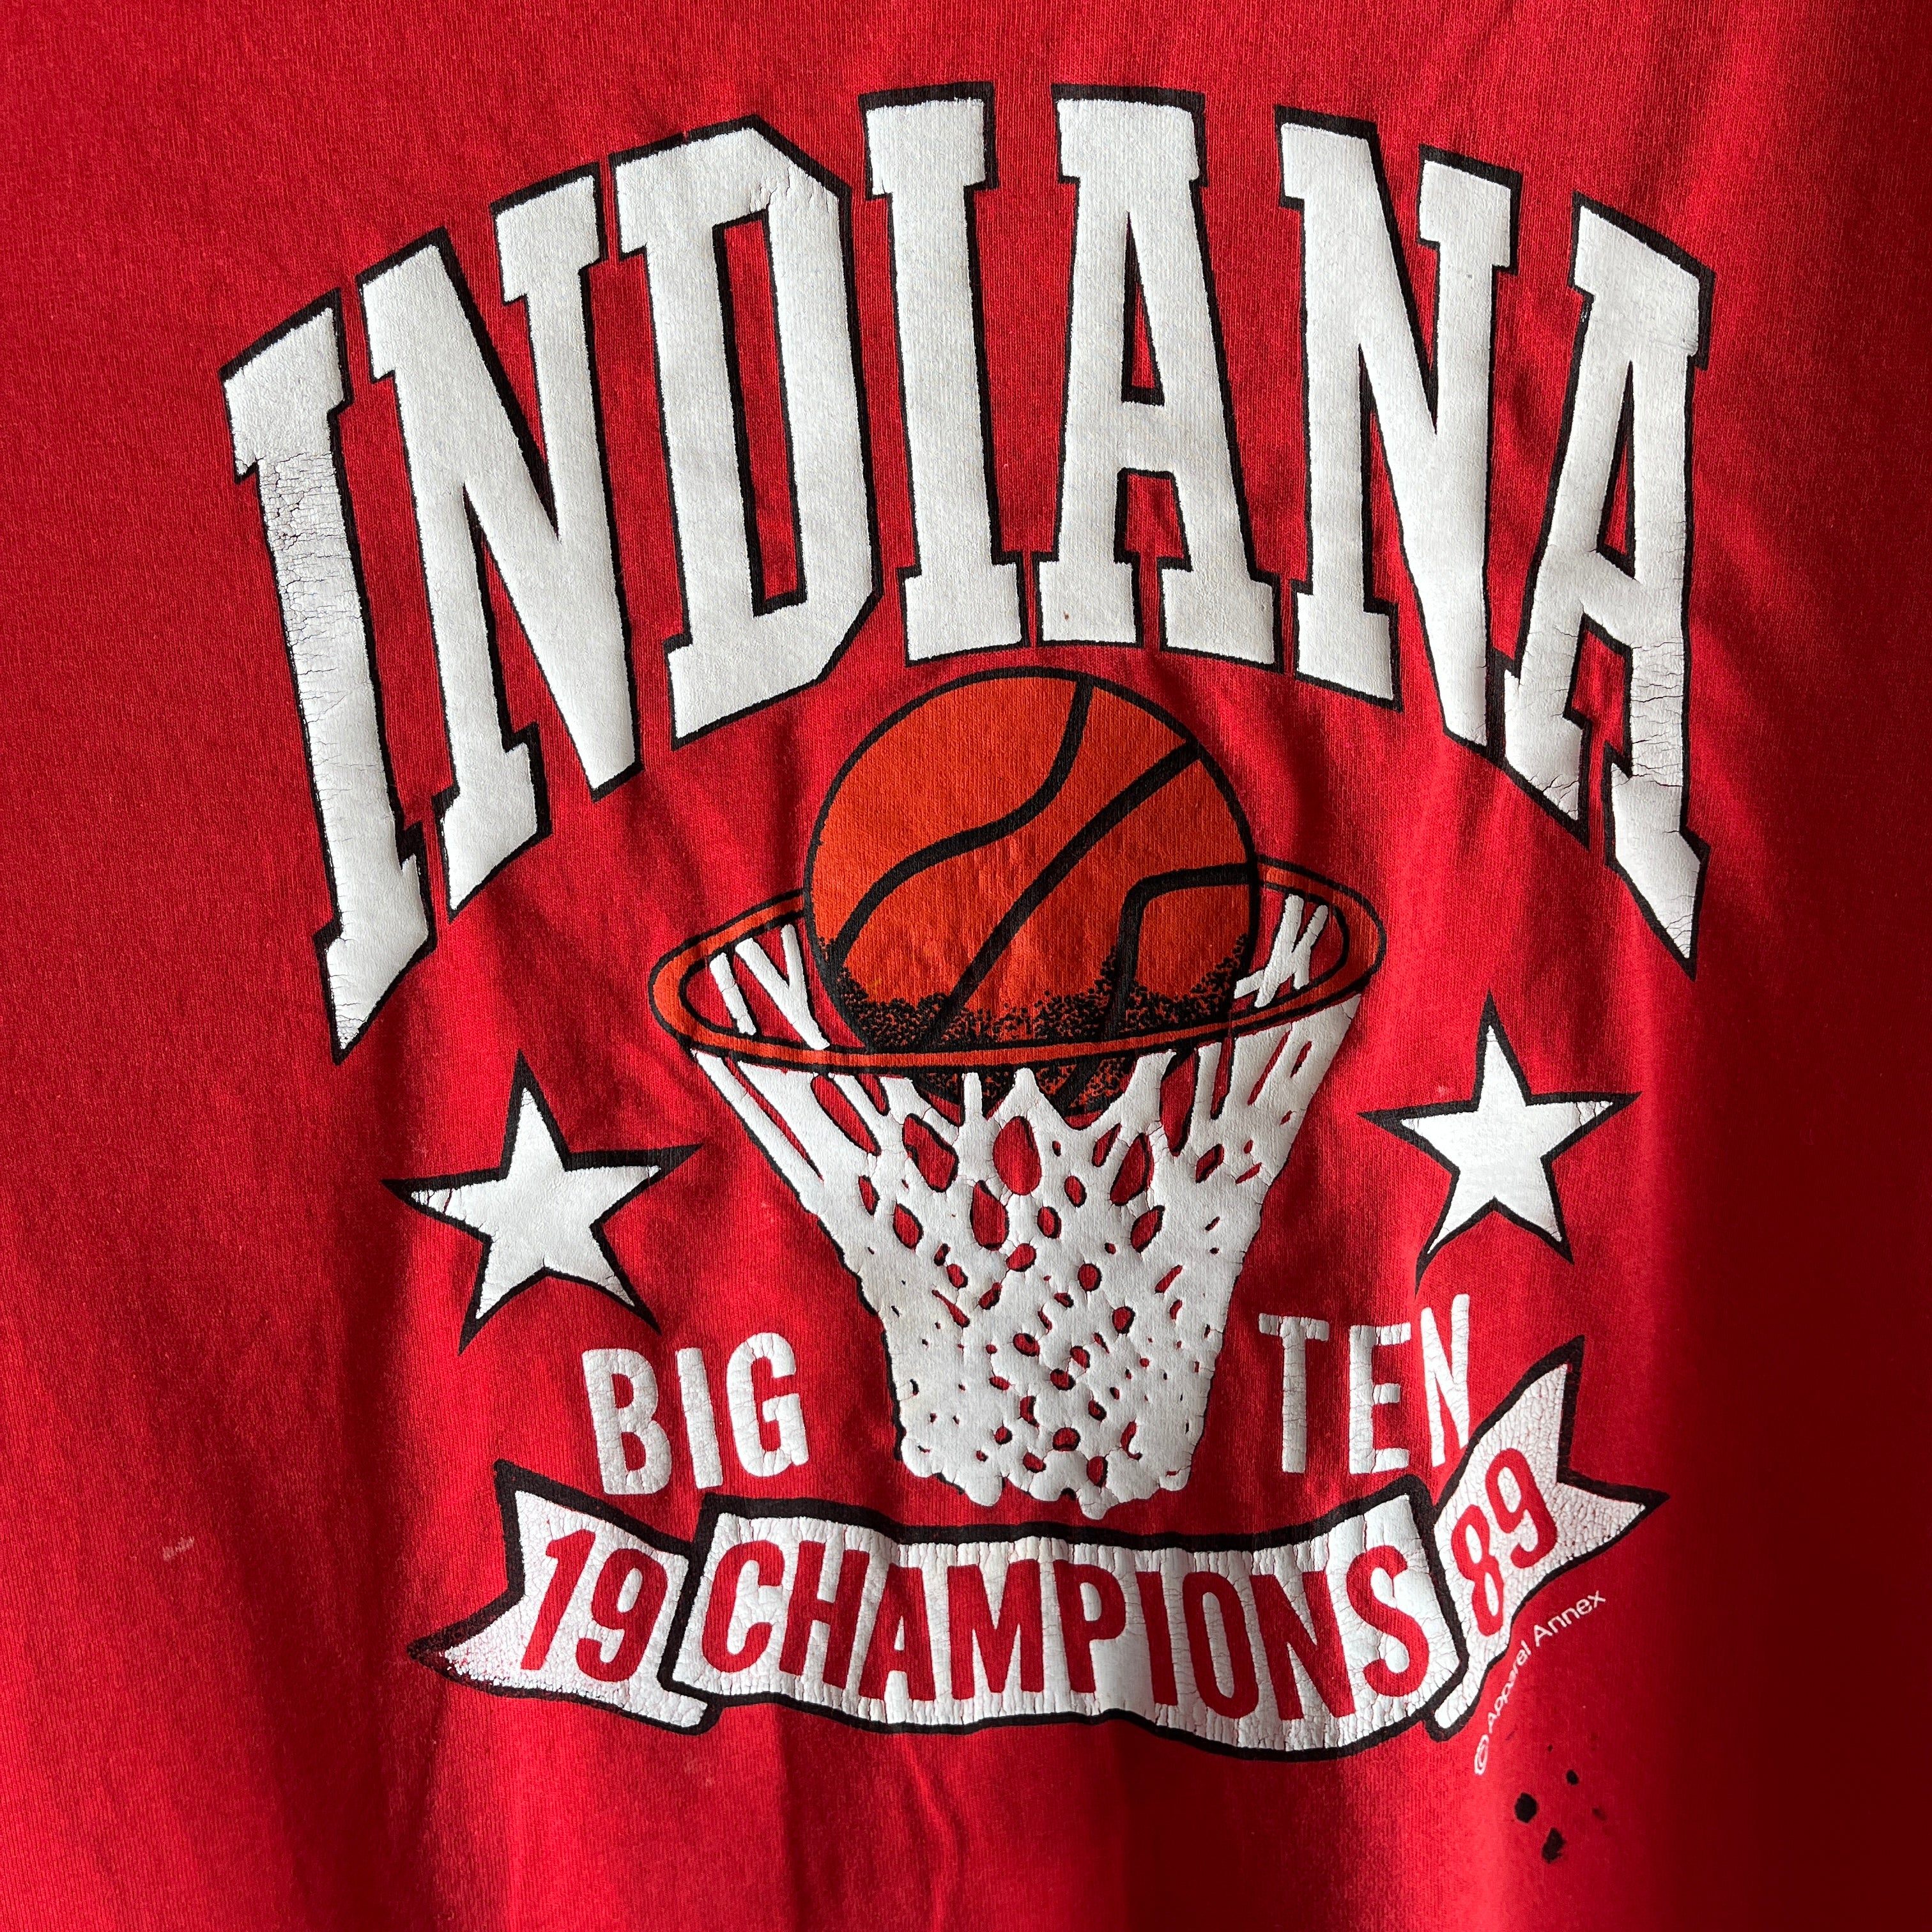 1989 Indiana Big Ten Championships T-Shirt by Screen Stars